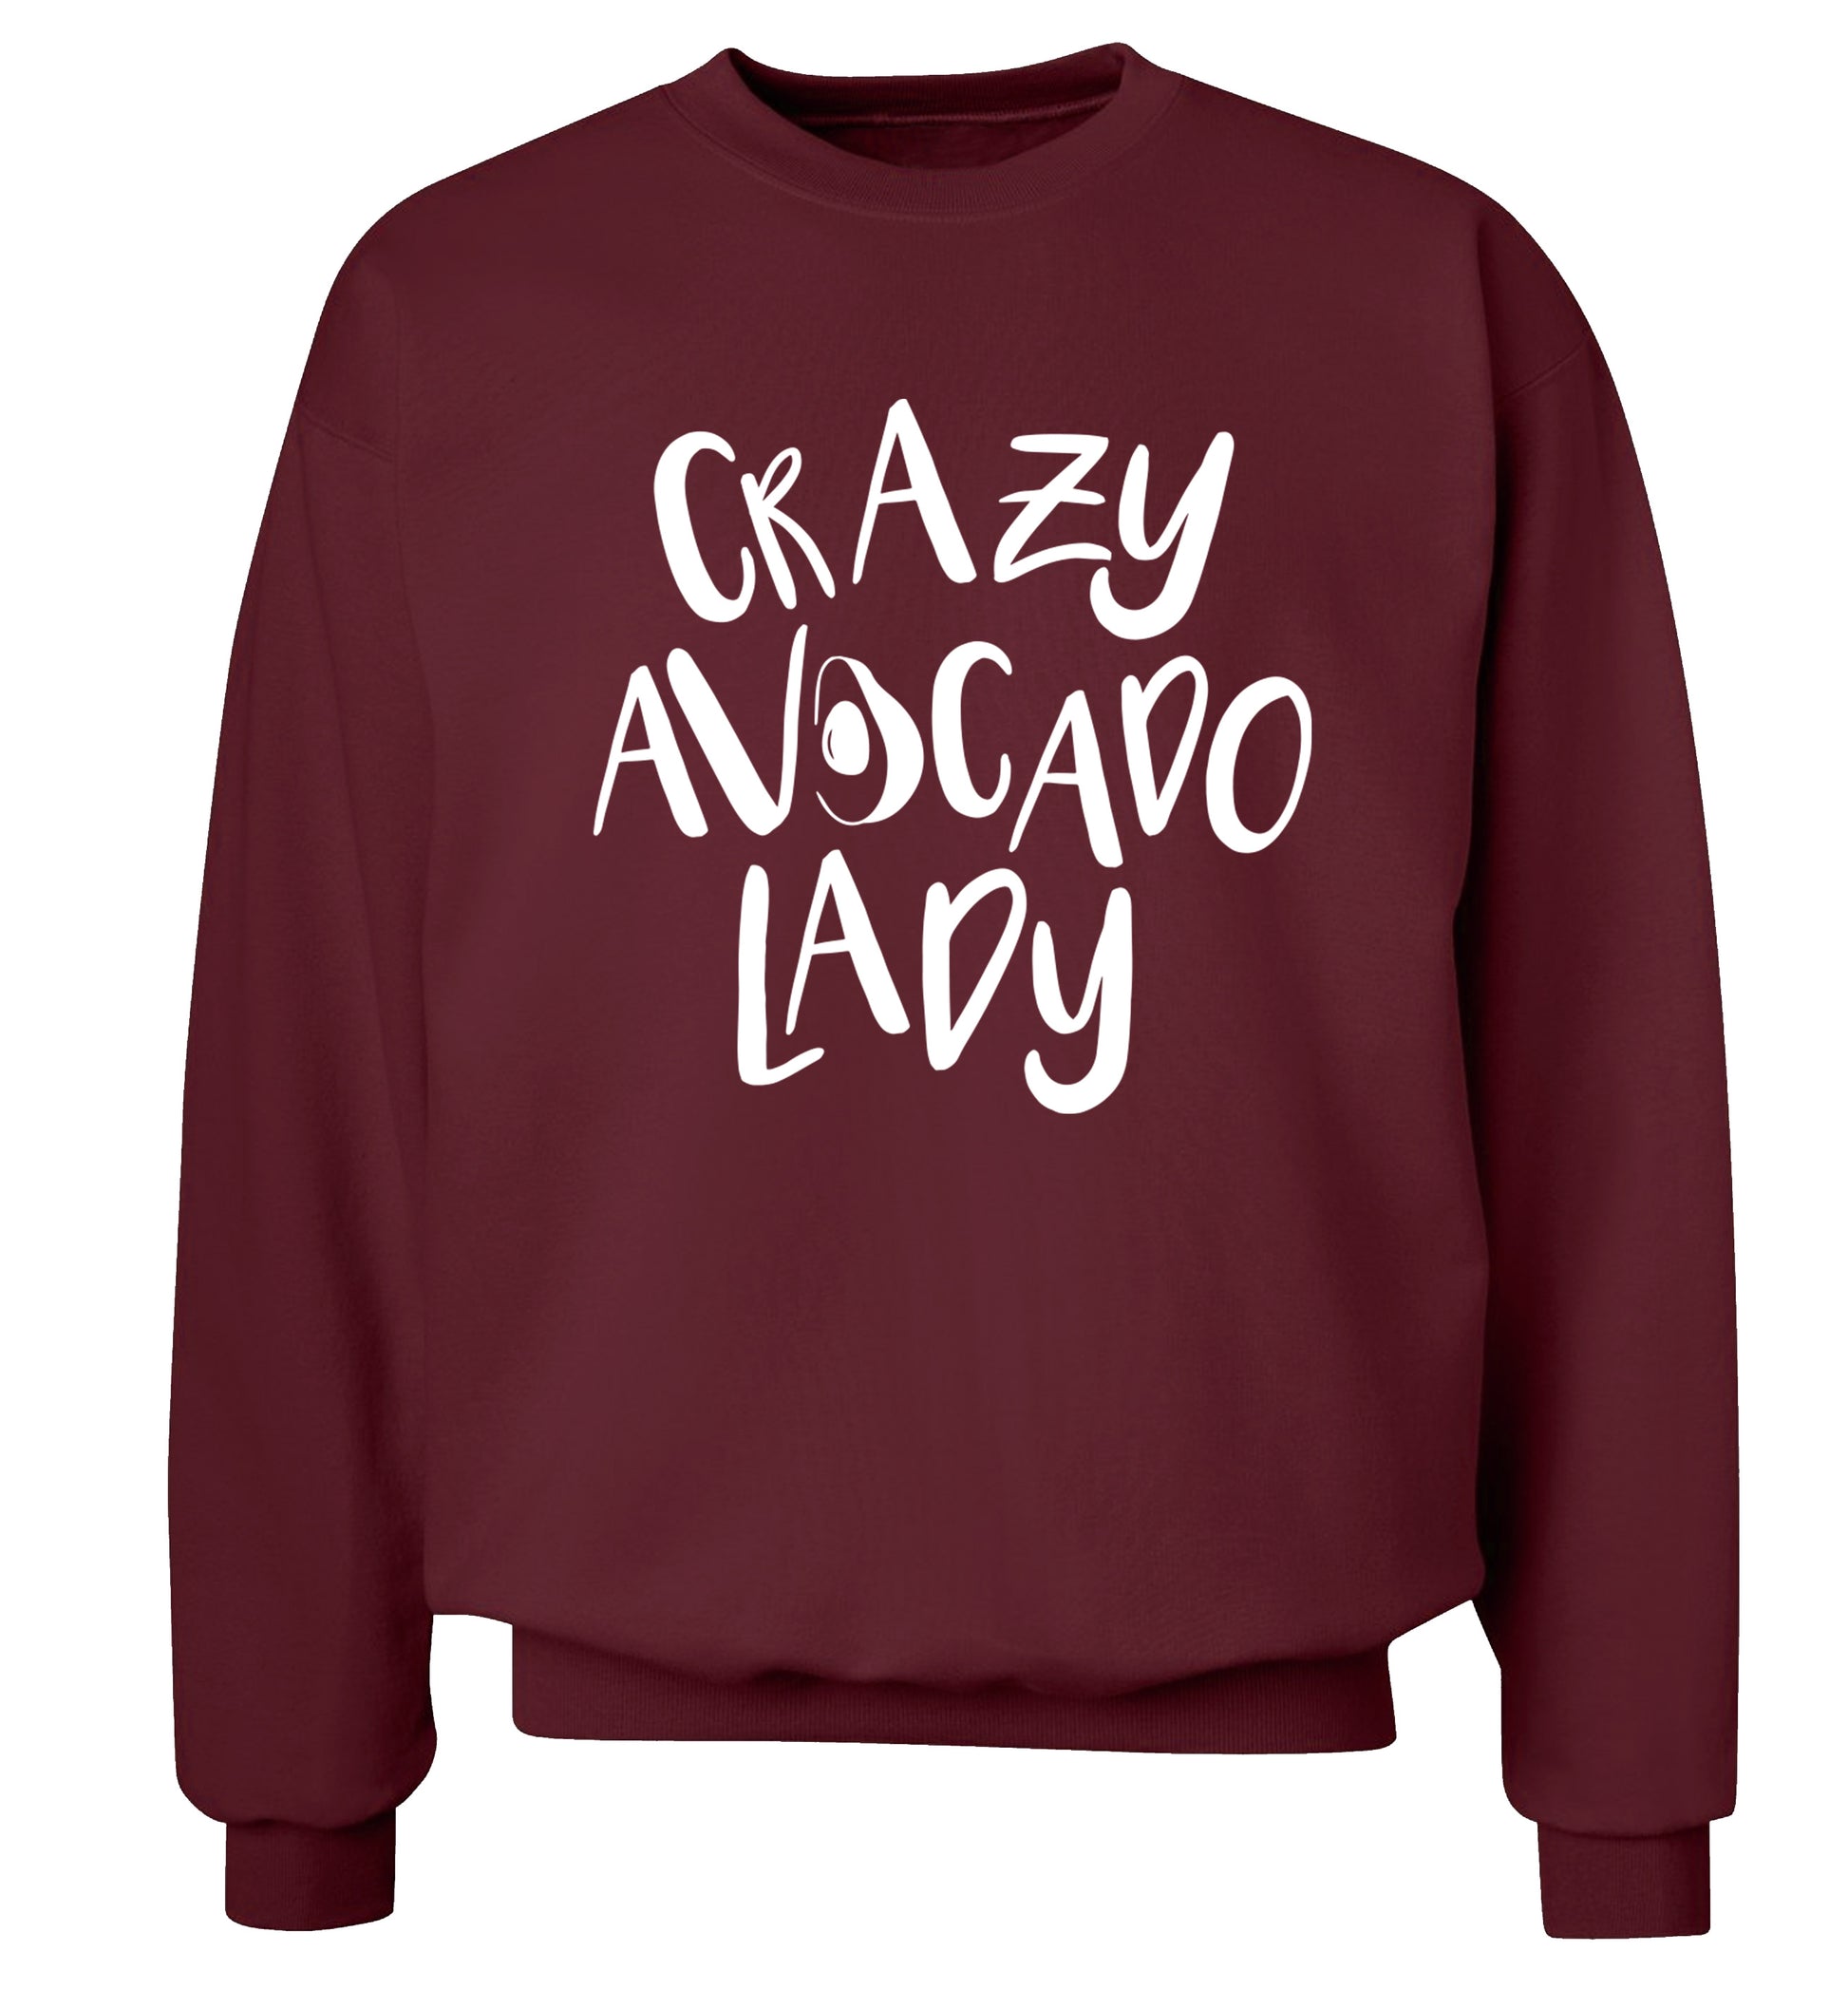 Crazy avocado lady Adult's unisex maroon Sweater 2XL